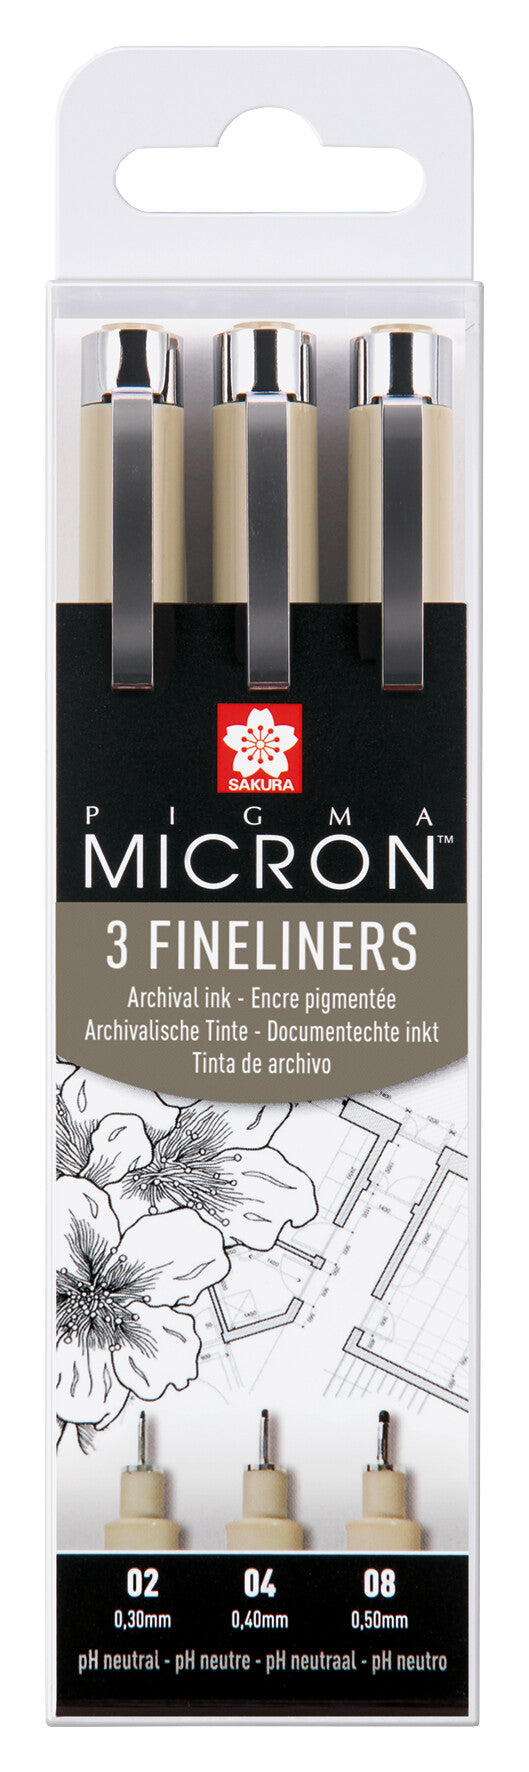 Pigma Micron Fineliner 03